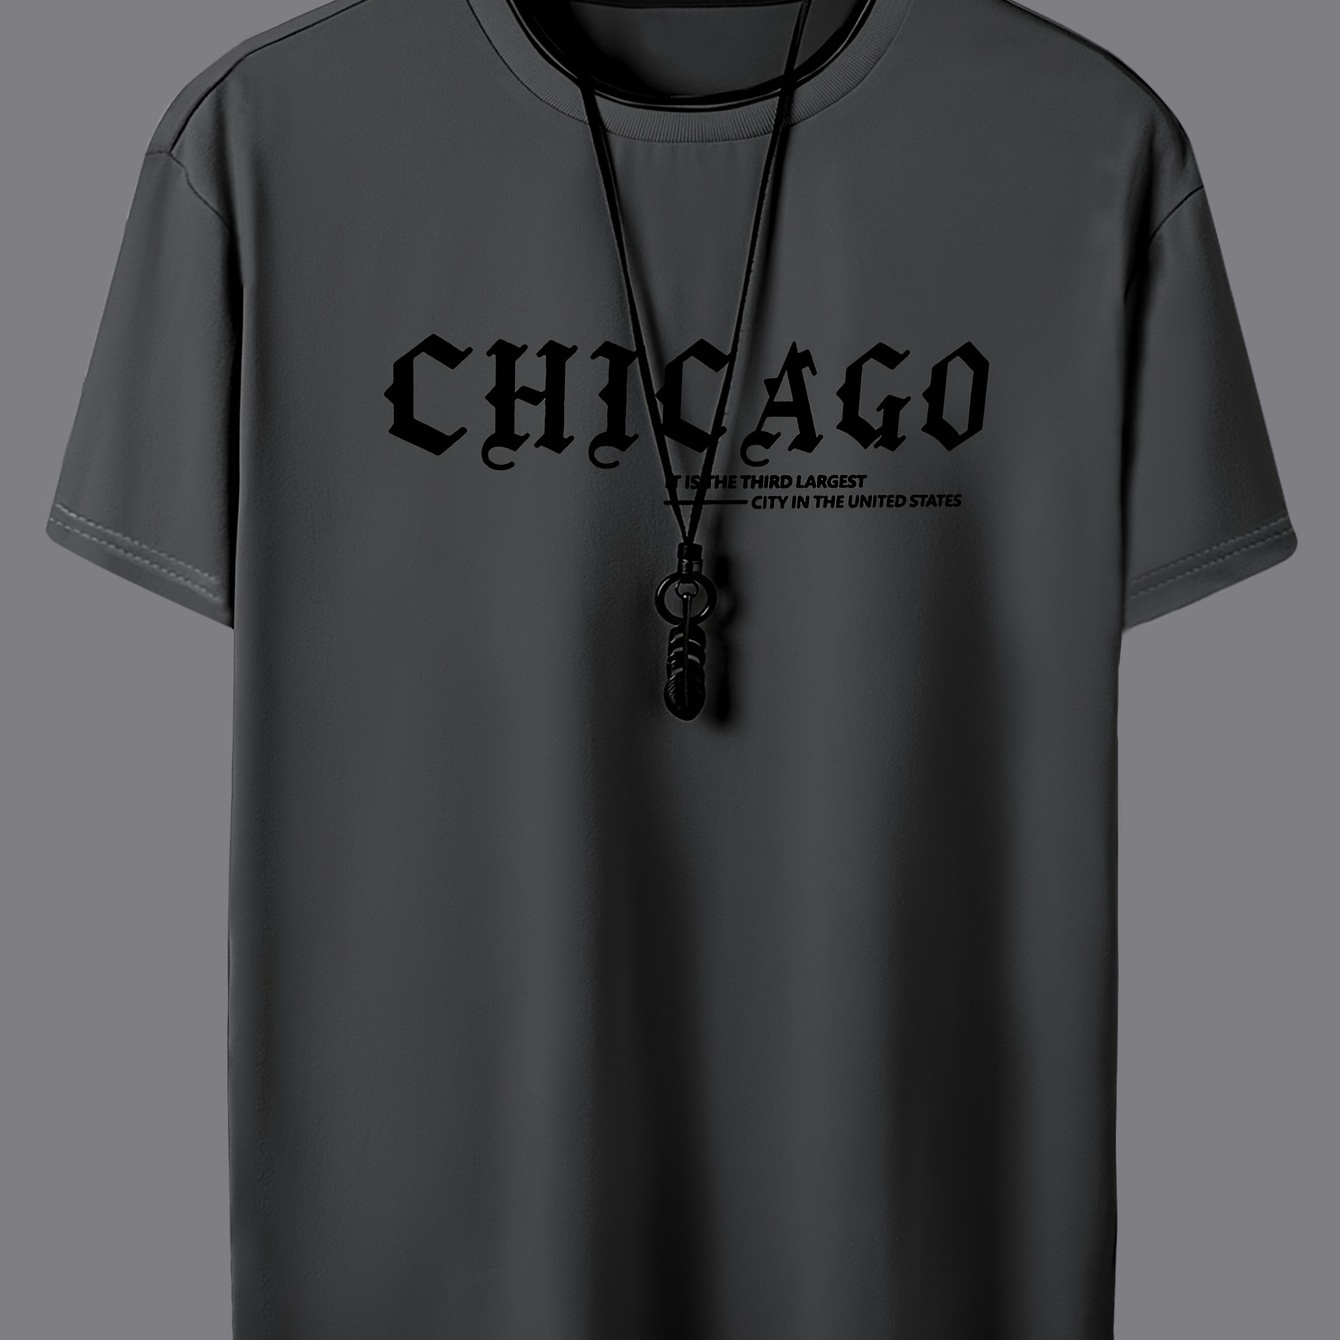 

Chicago Print Men's Casual Sports Short Sleeve Crew Neck T-shirt, Summer Outdoor